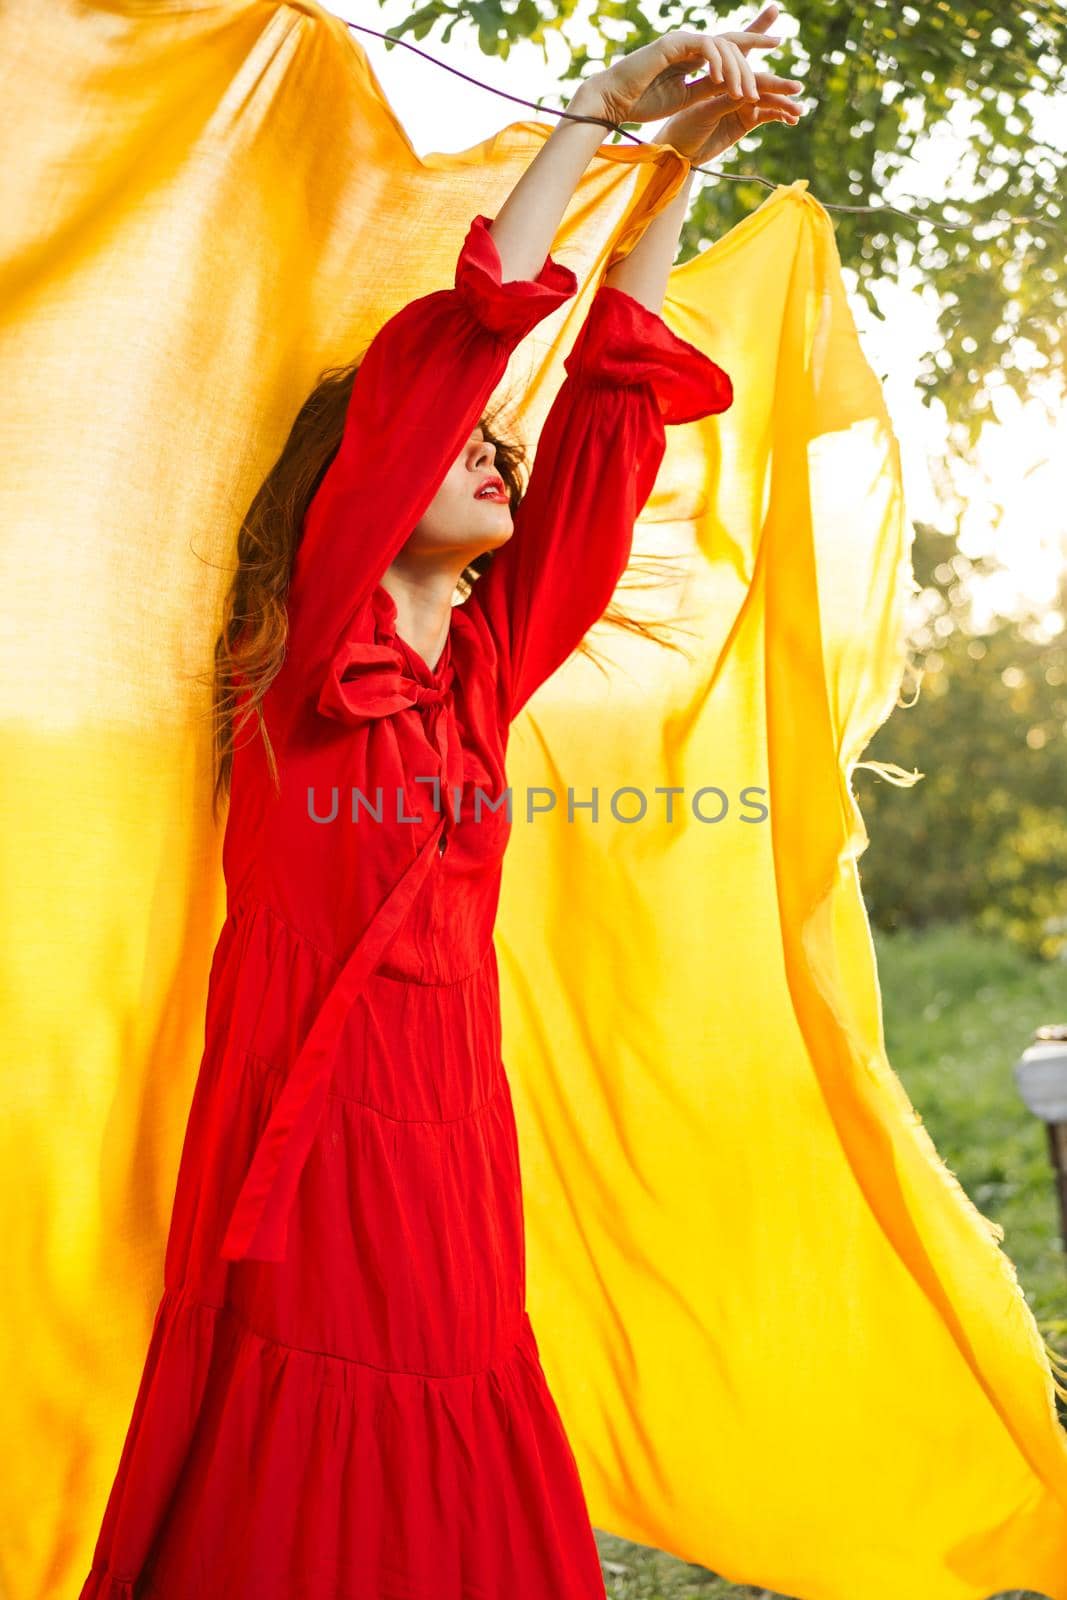 pretty woman nature yellow cloth fresh air glamor. High quality photo